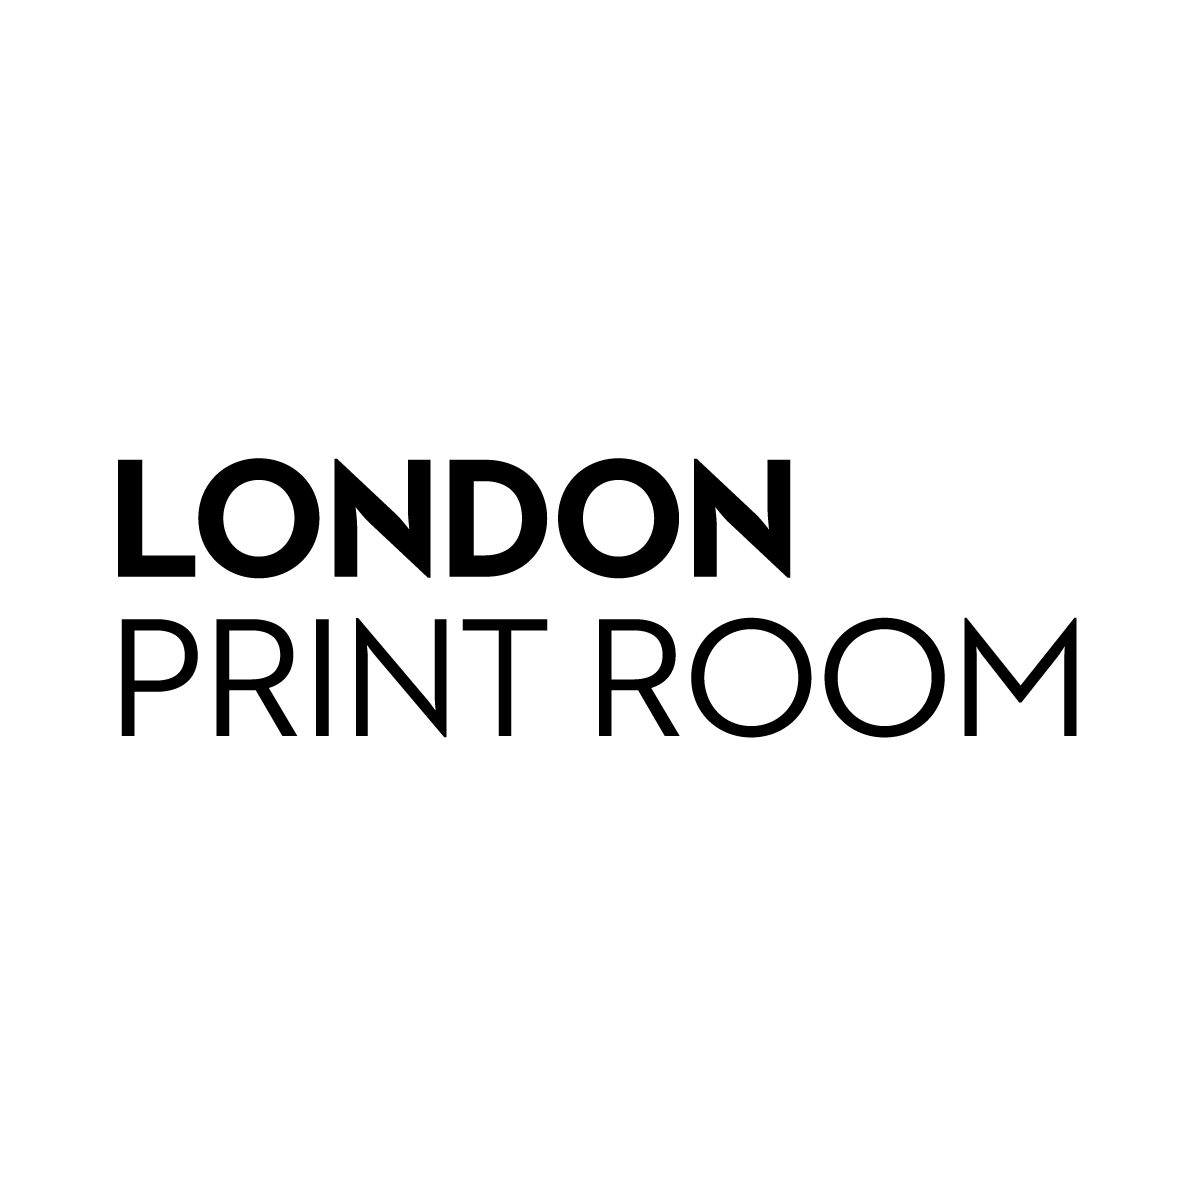 London Print Room